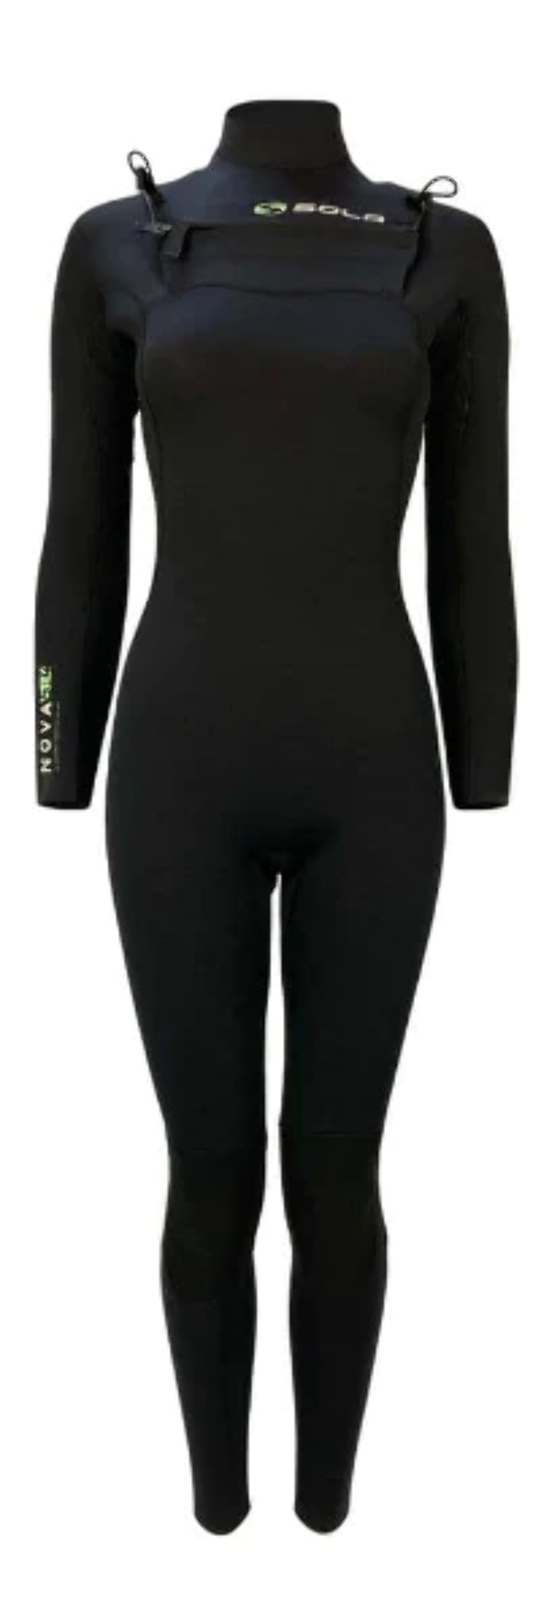 Sola Nova 5/4mm wetsuit womens